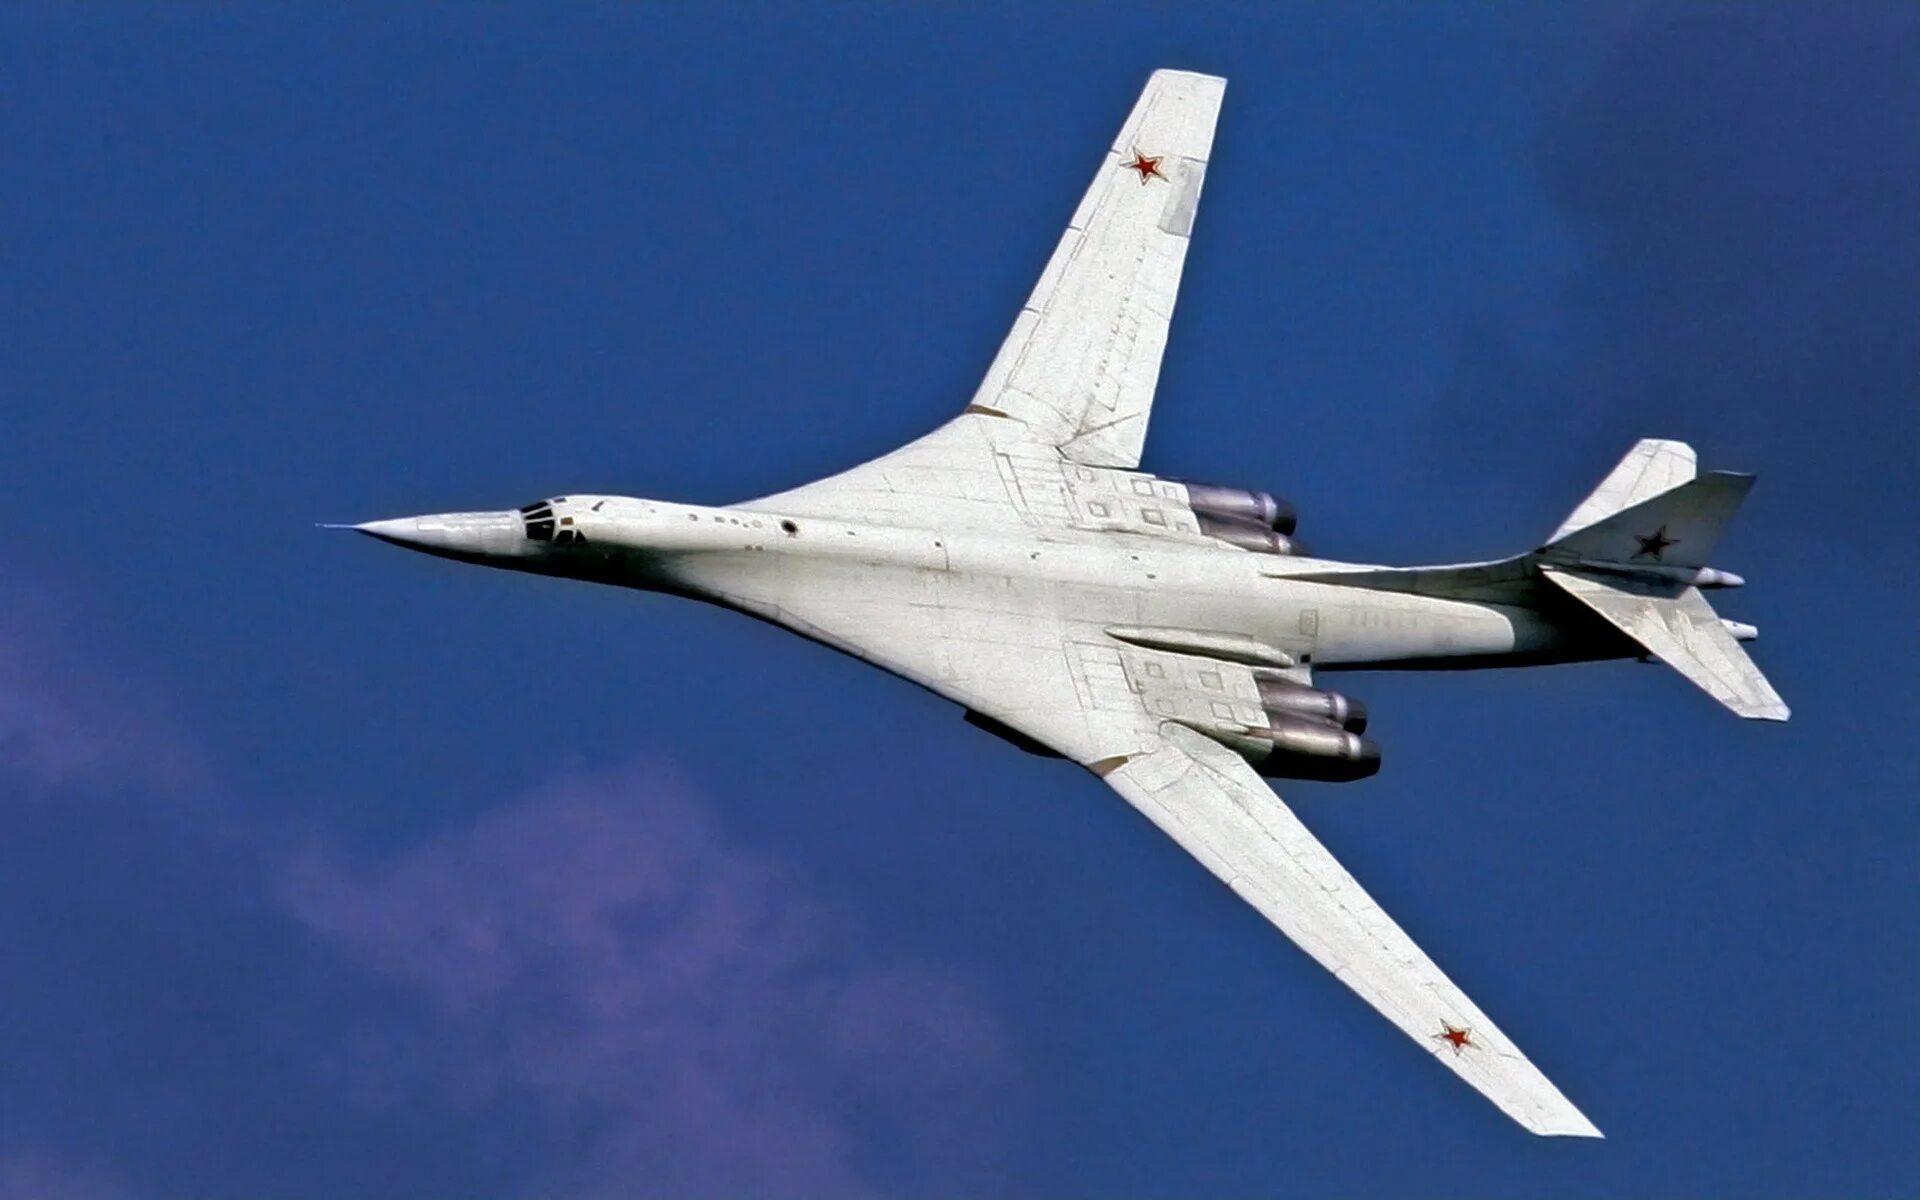 Бомбардировщик белый лебедь ту 160. Ту-160м белый лебедь. Ту-160 сверхзвуковой самолёт белый лебедь. Стратегический бомбардировщик России ту 160.